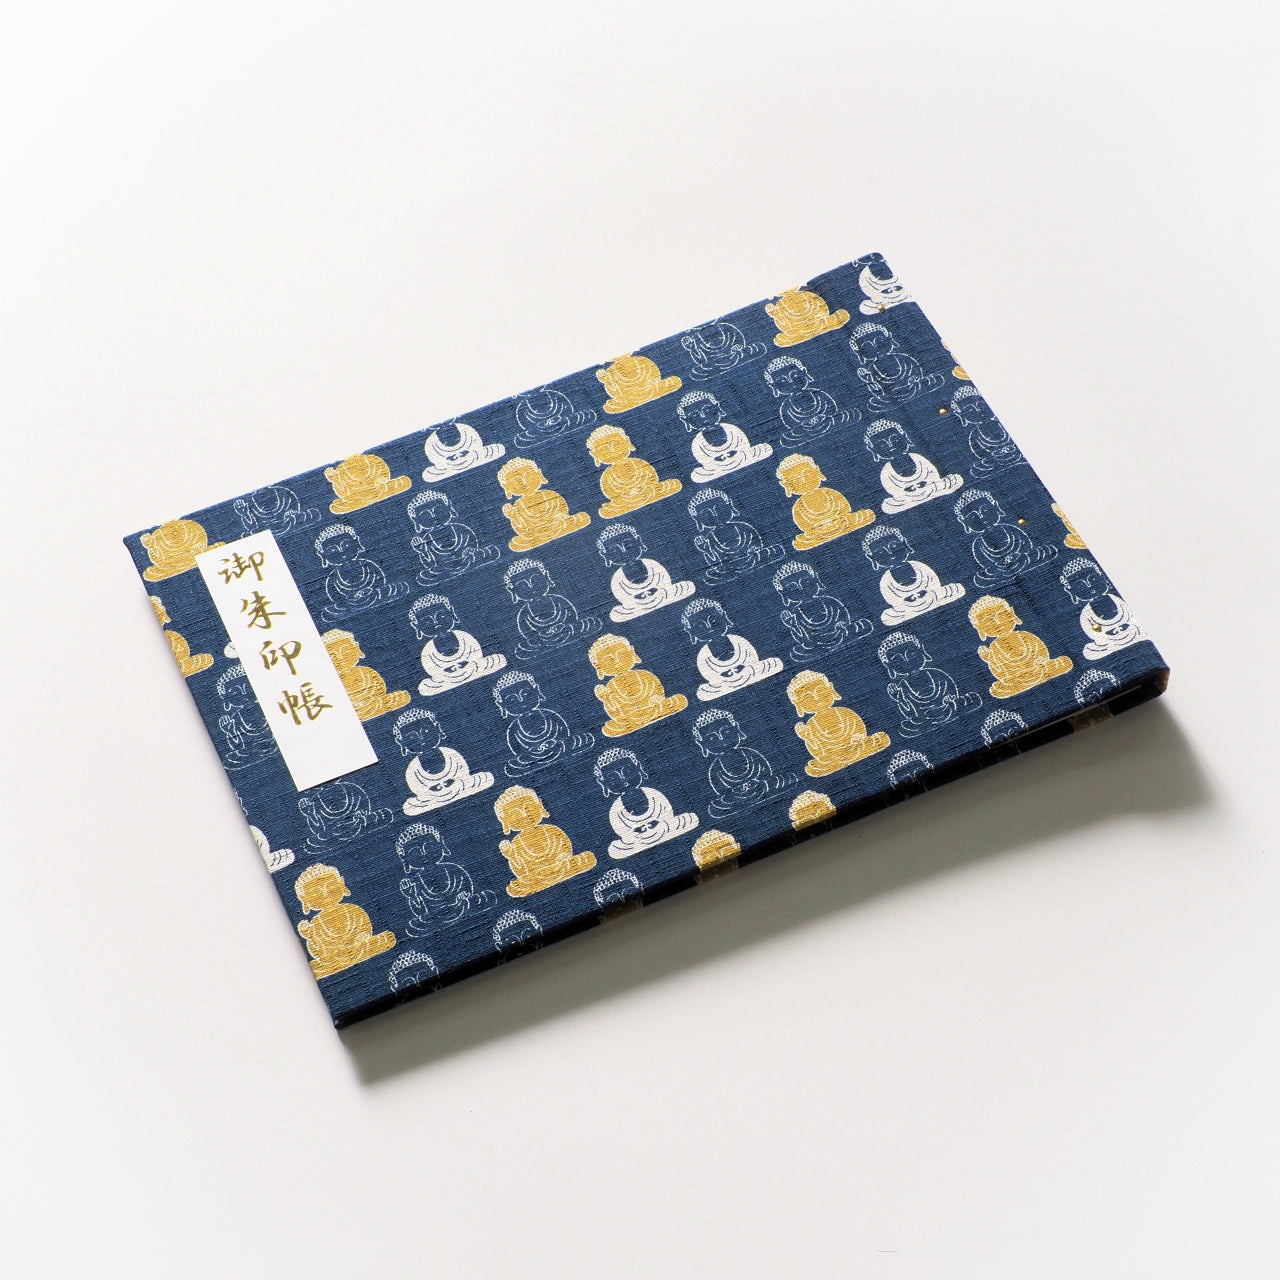 Goshuin holder (spread size) "Yu" warm Japanese pattern/Great Buddha blue